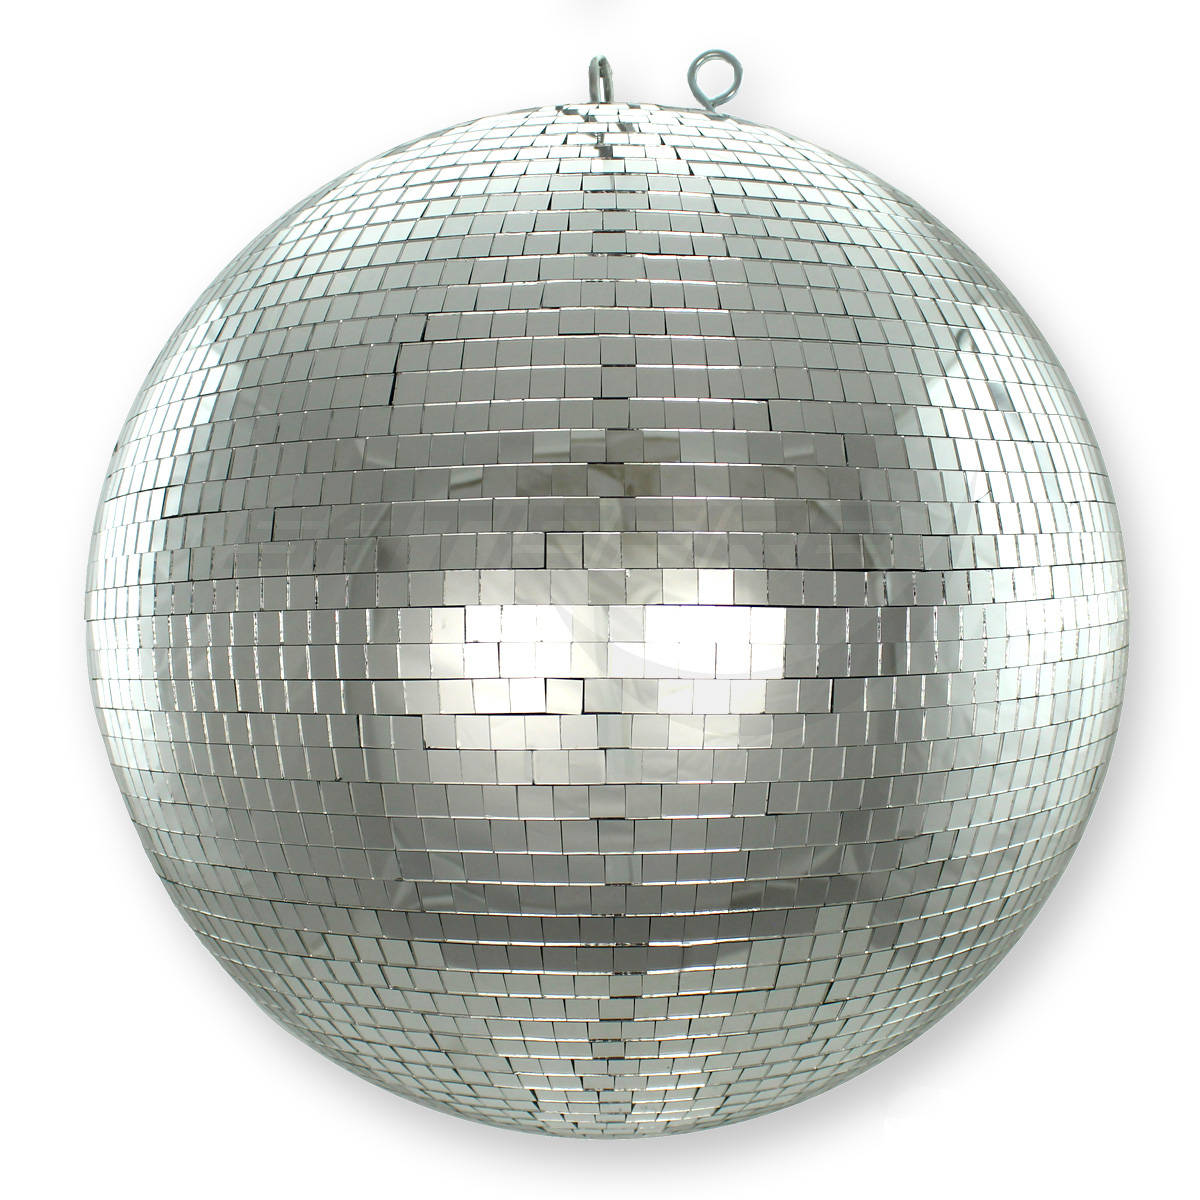 Spiegelkugel 40cm silber chrome- Diskokugel (Discokugel) Party Lichteffekt - Echtglas - mirrorball chrome silver color